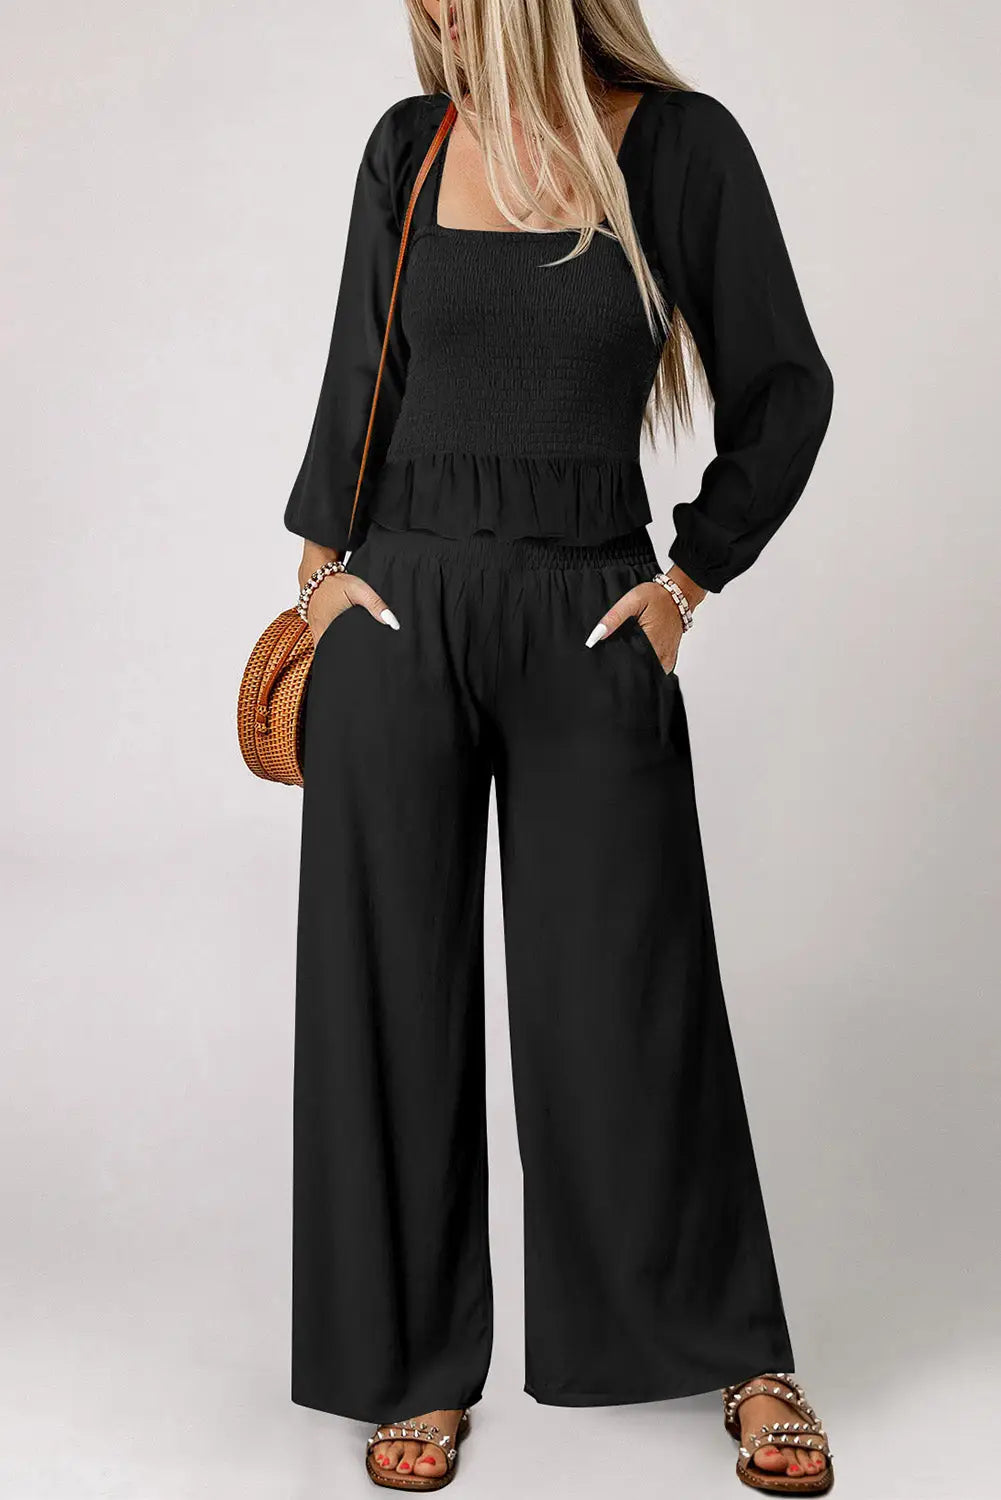 Black square neck smocked peplum top and pants set - l / 100% polyester - sets